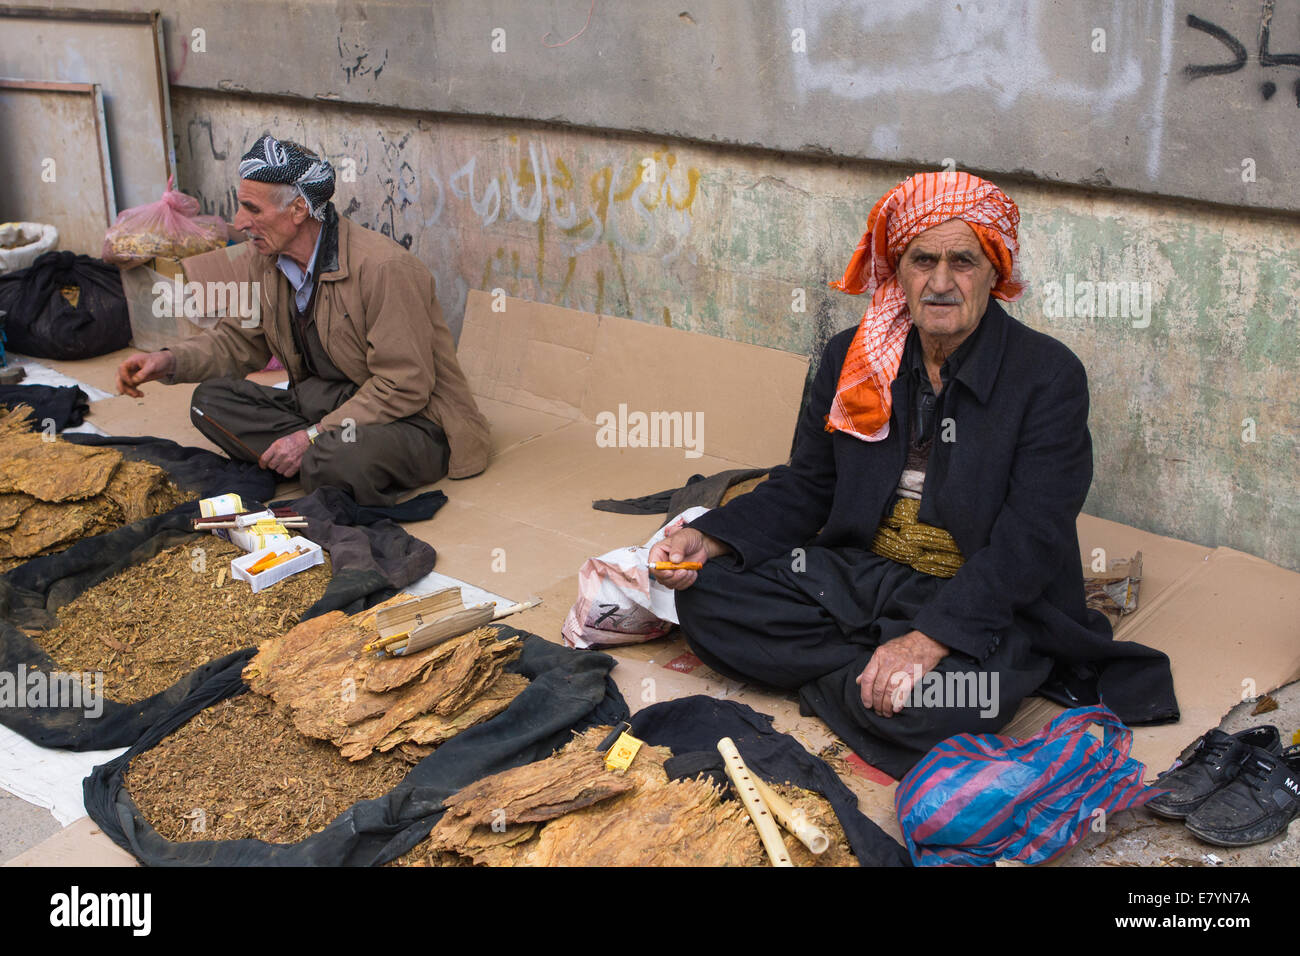 Kurdish street vendors wearing traditional clothing selling tobacco in Erbil (Arbil), Iraqi Kurdistan province, Iraq. Stock Photo